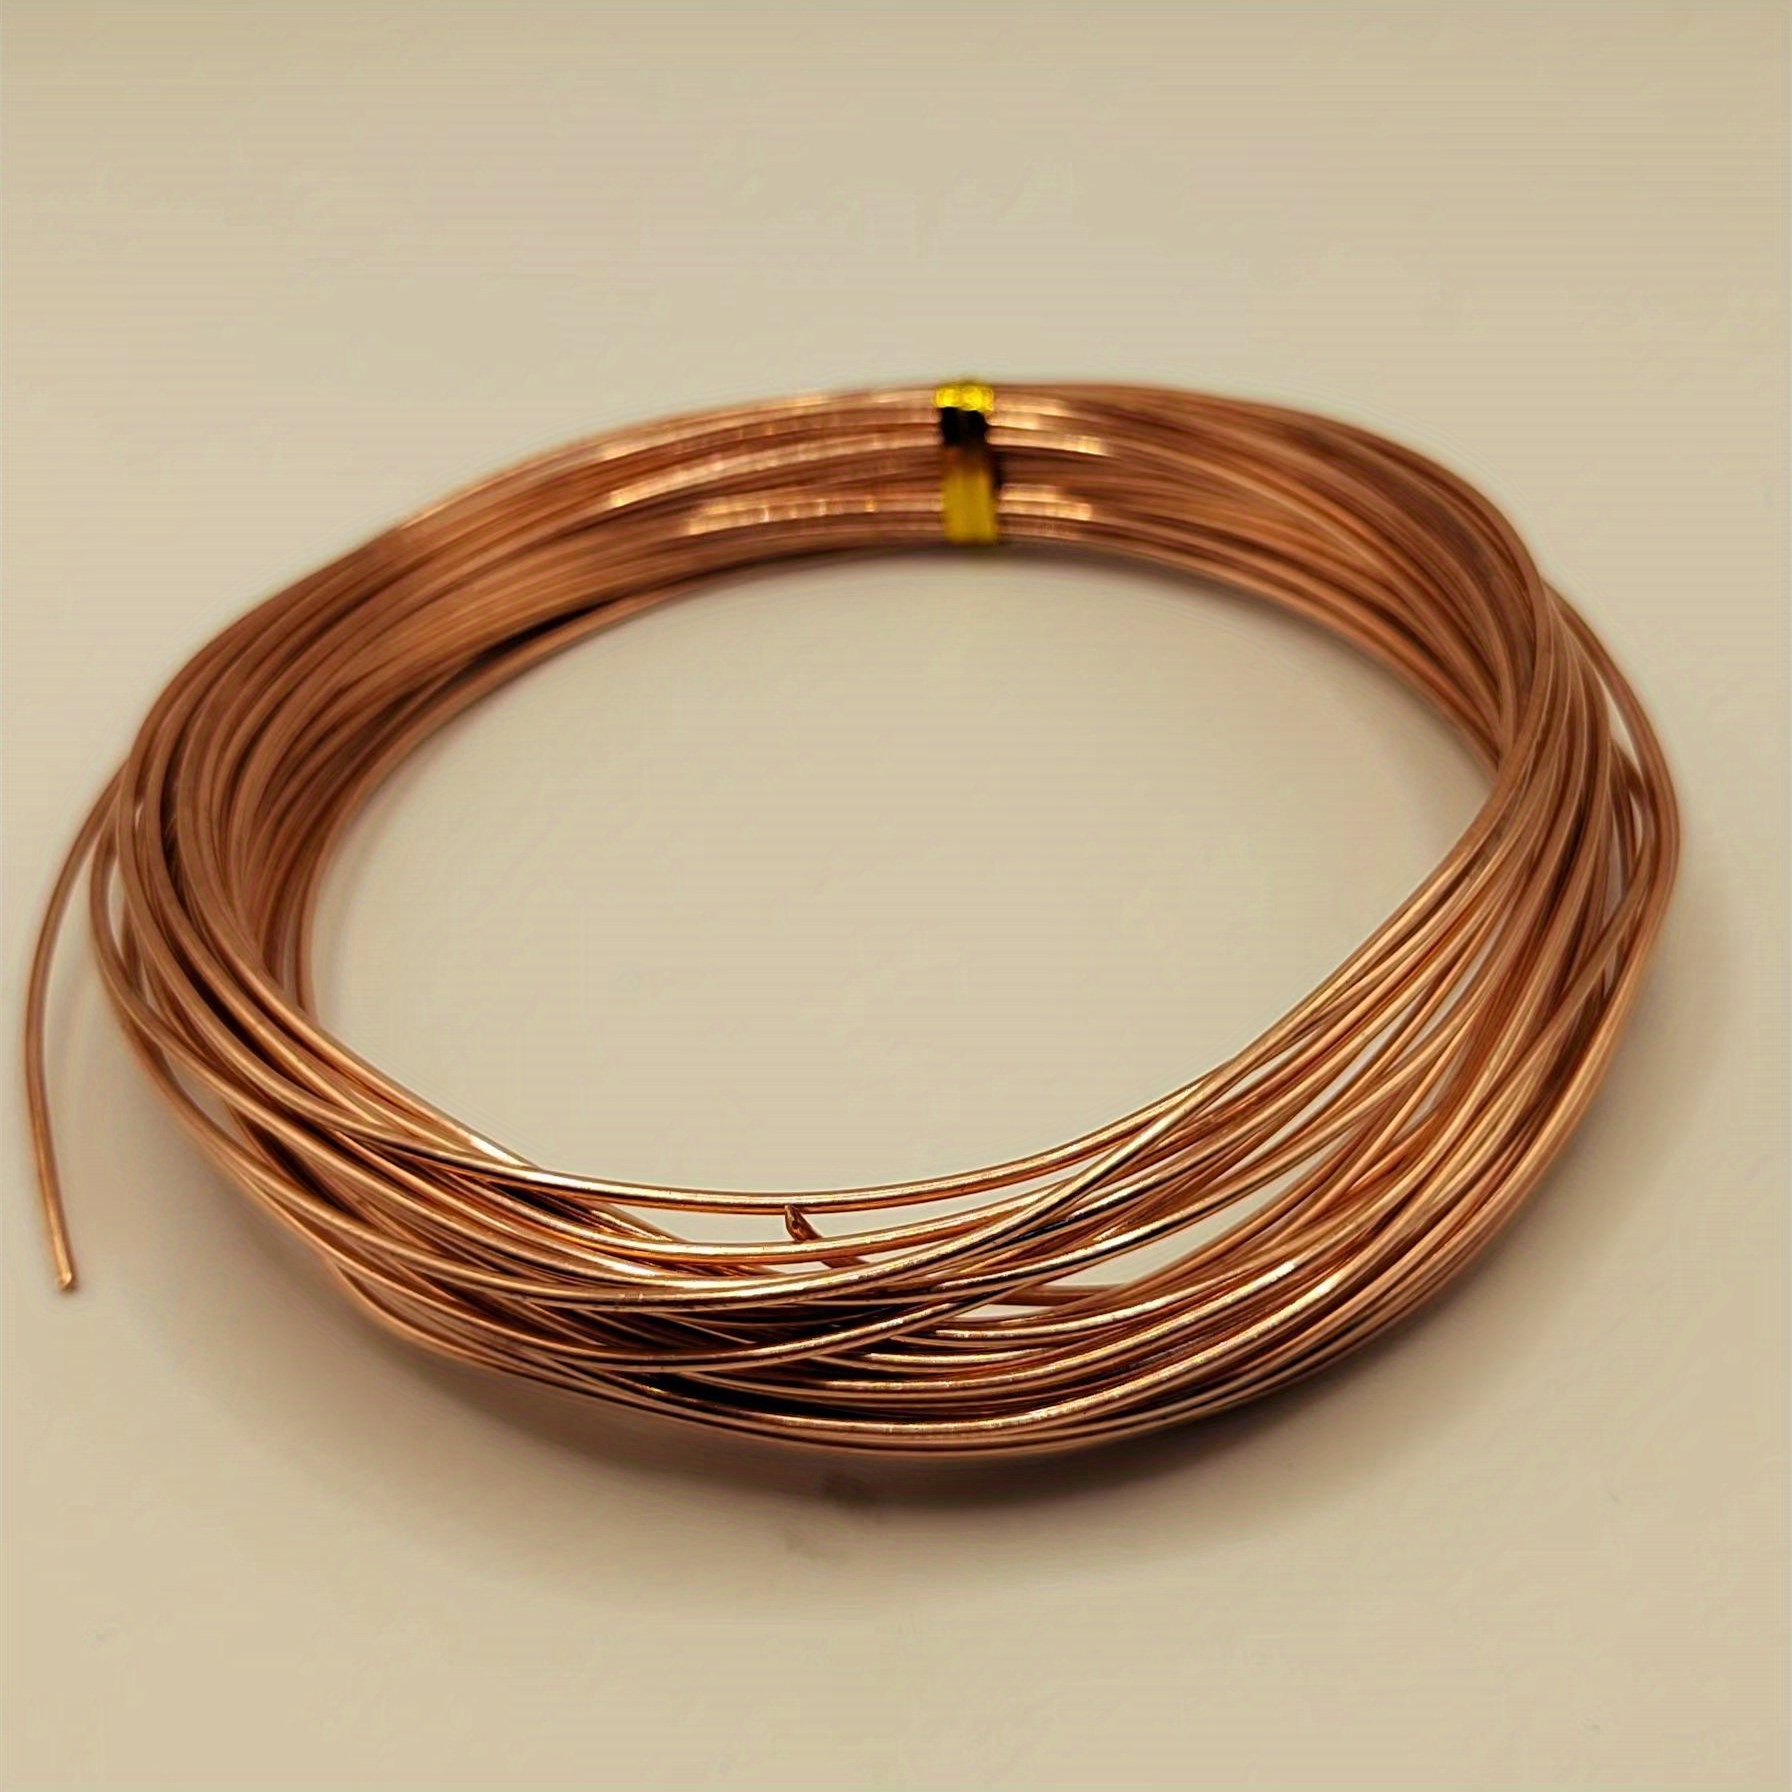 99.9% Soft Copper Wire, 12 Gauge/2mm Diameter 59 Feet/18m 1.1 Pound Spool